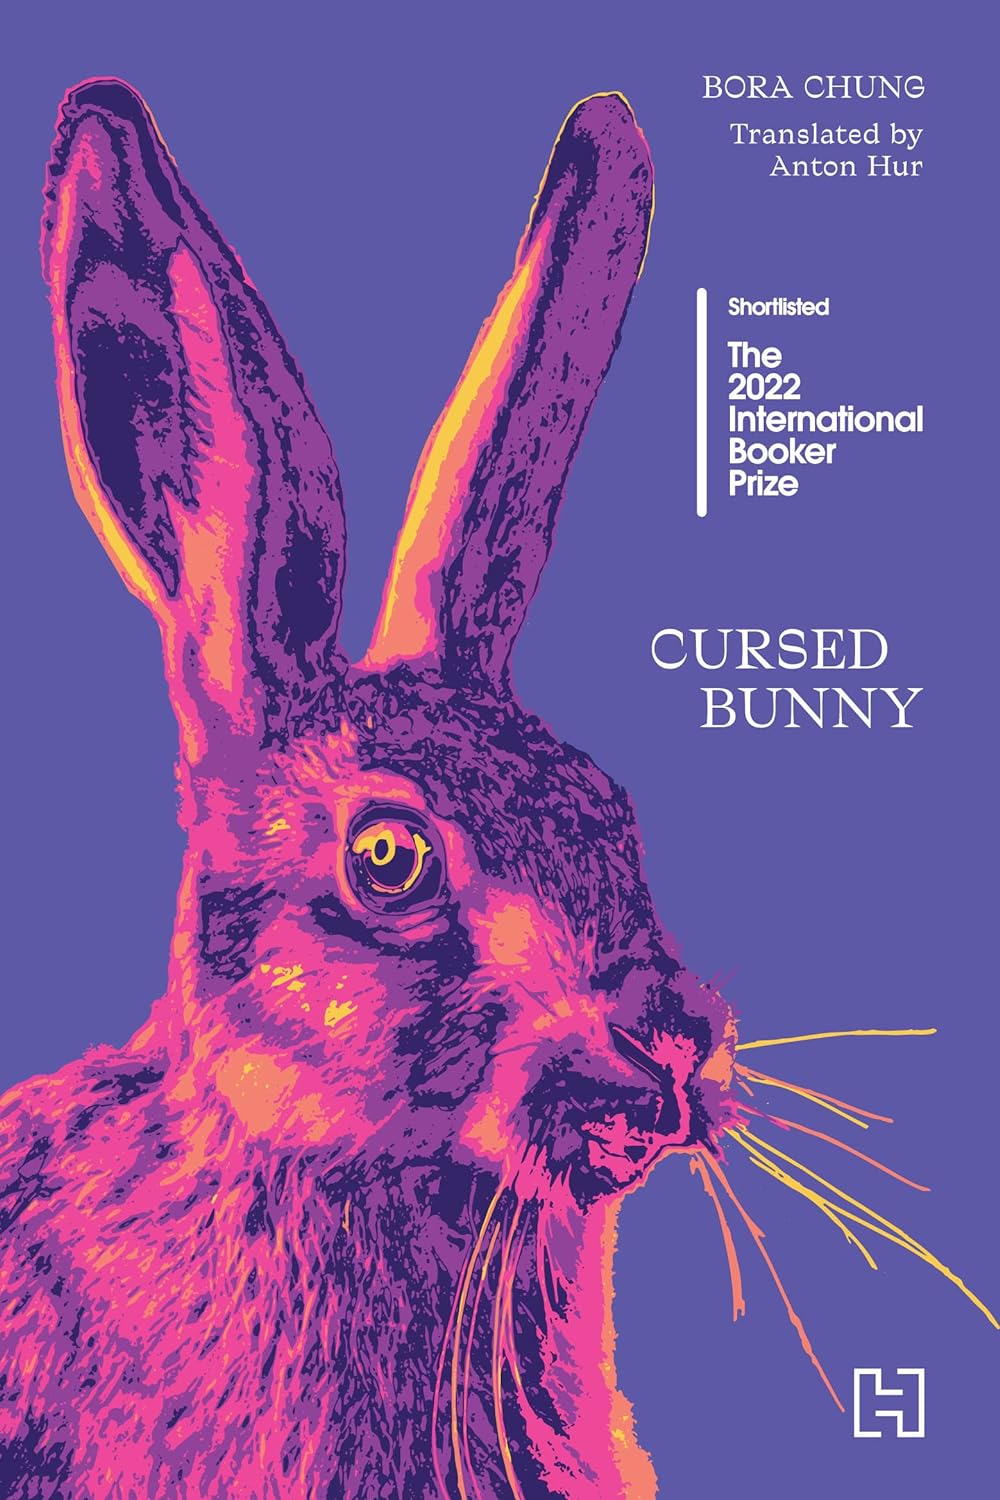 Cursed Bunny by Bora Chung (Author) and Anton Hur (Translator)